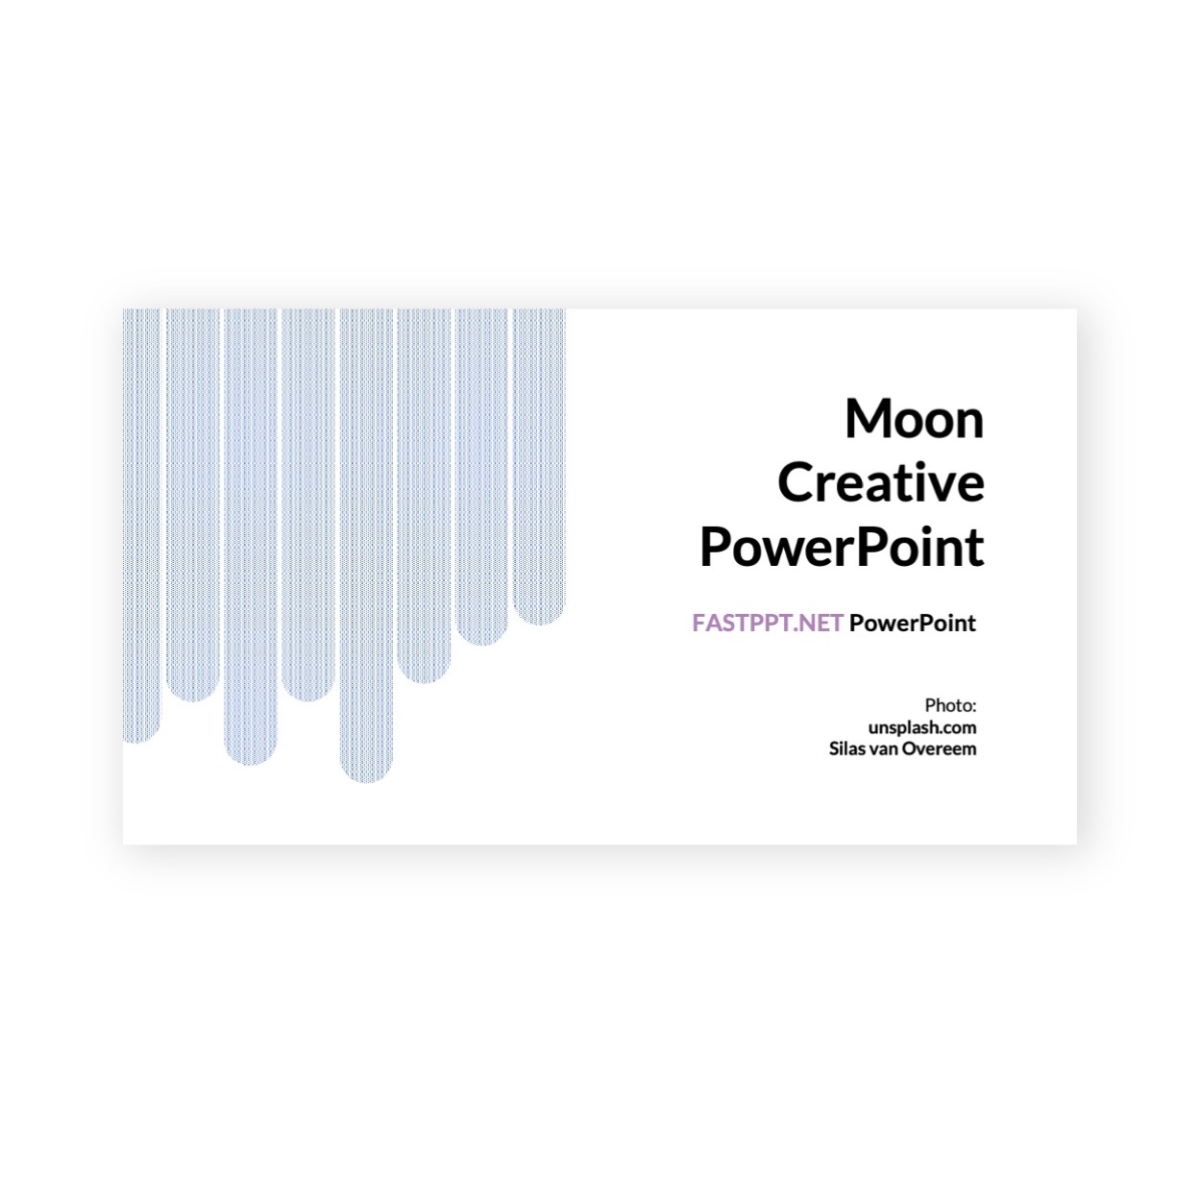 Moon Creative PowerPoint Showcase